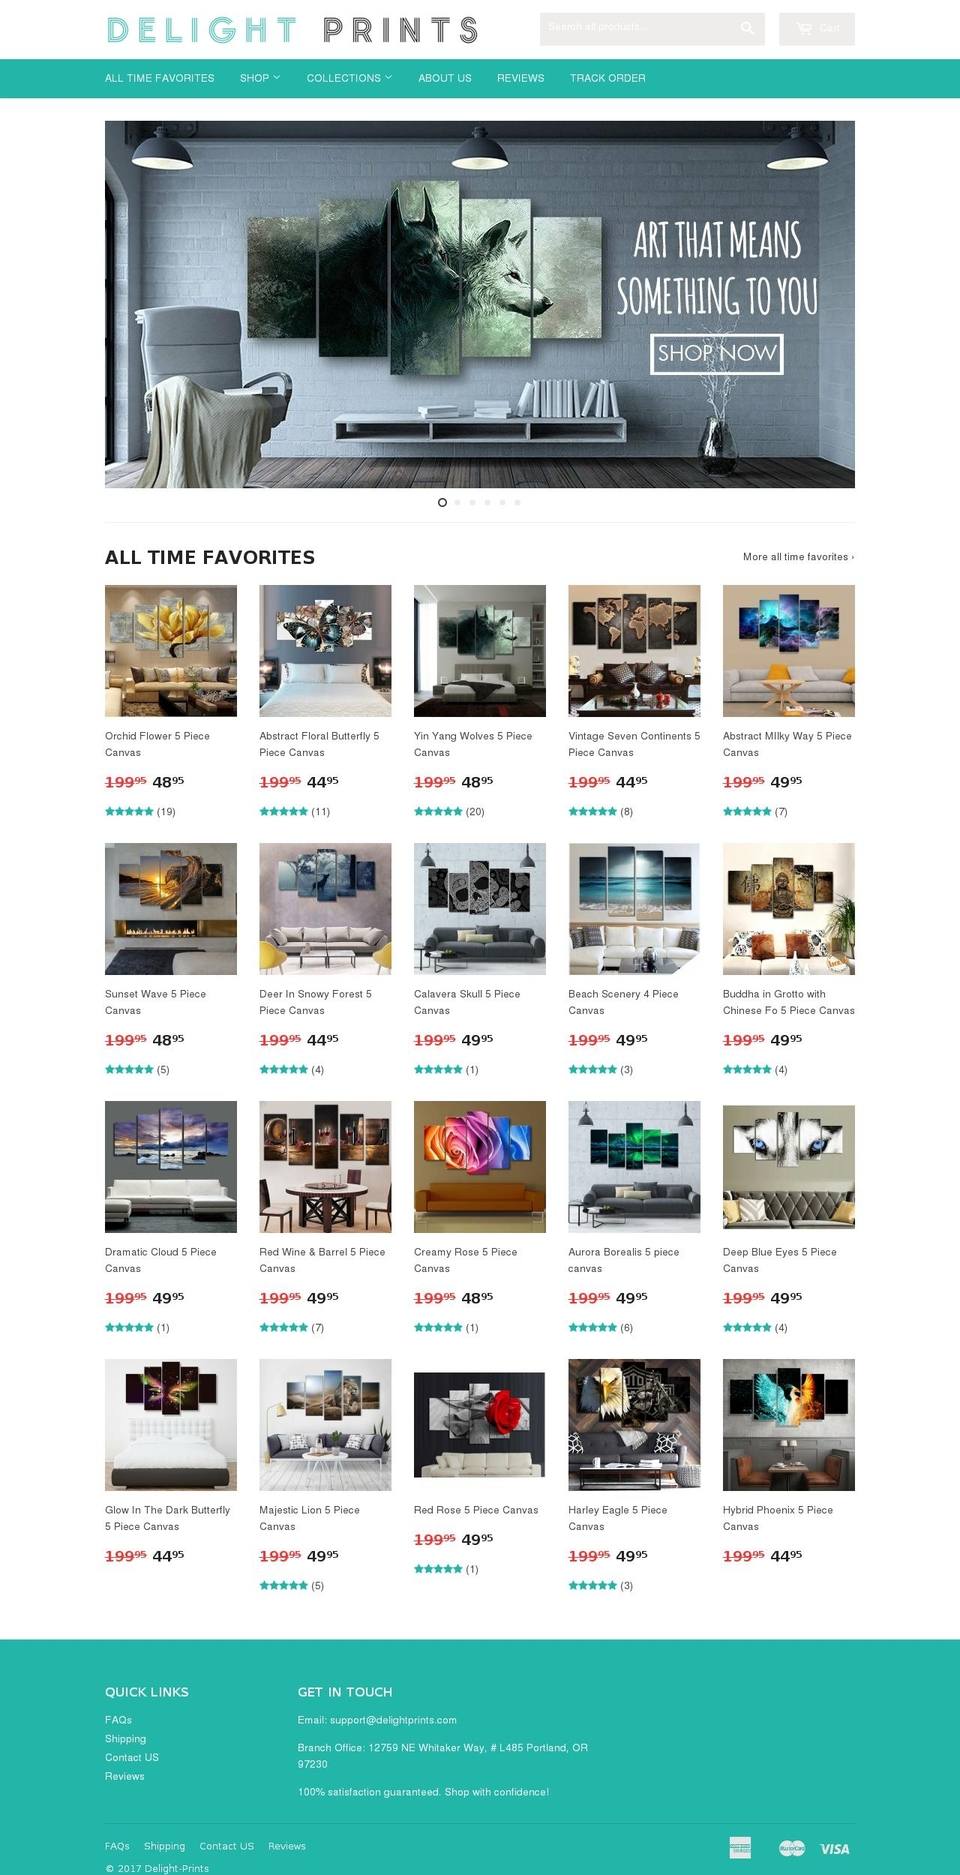 delightprints.com shopify website screenshot